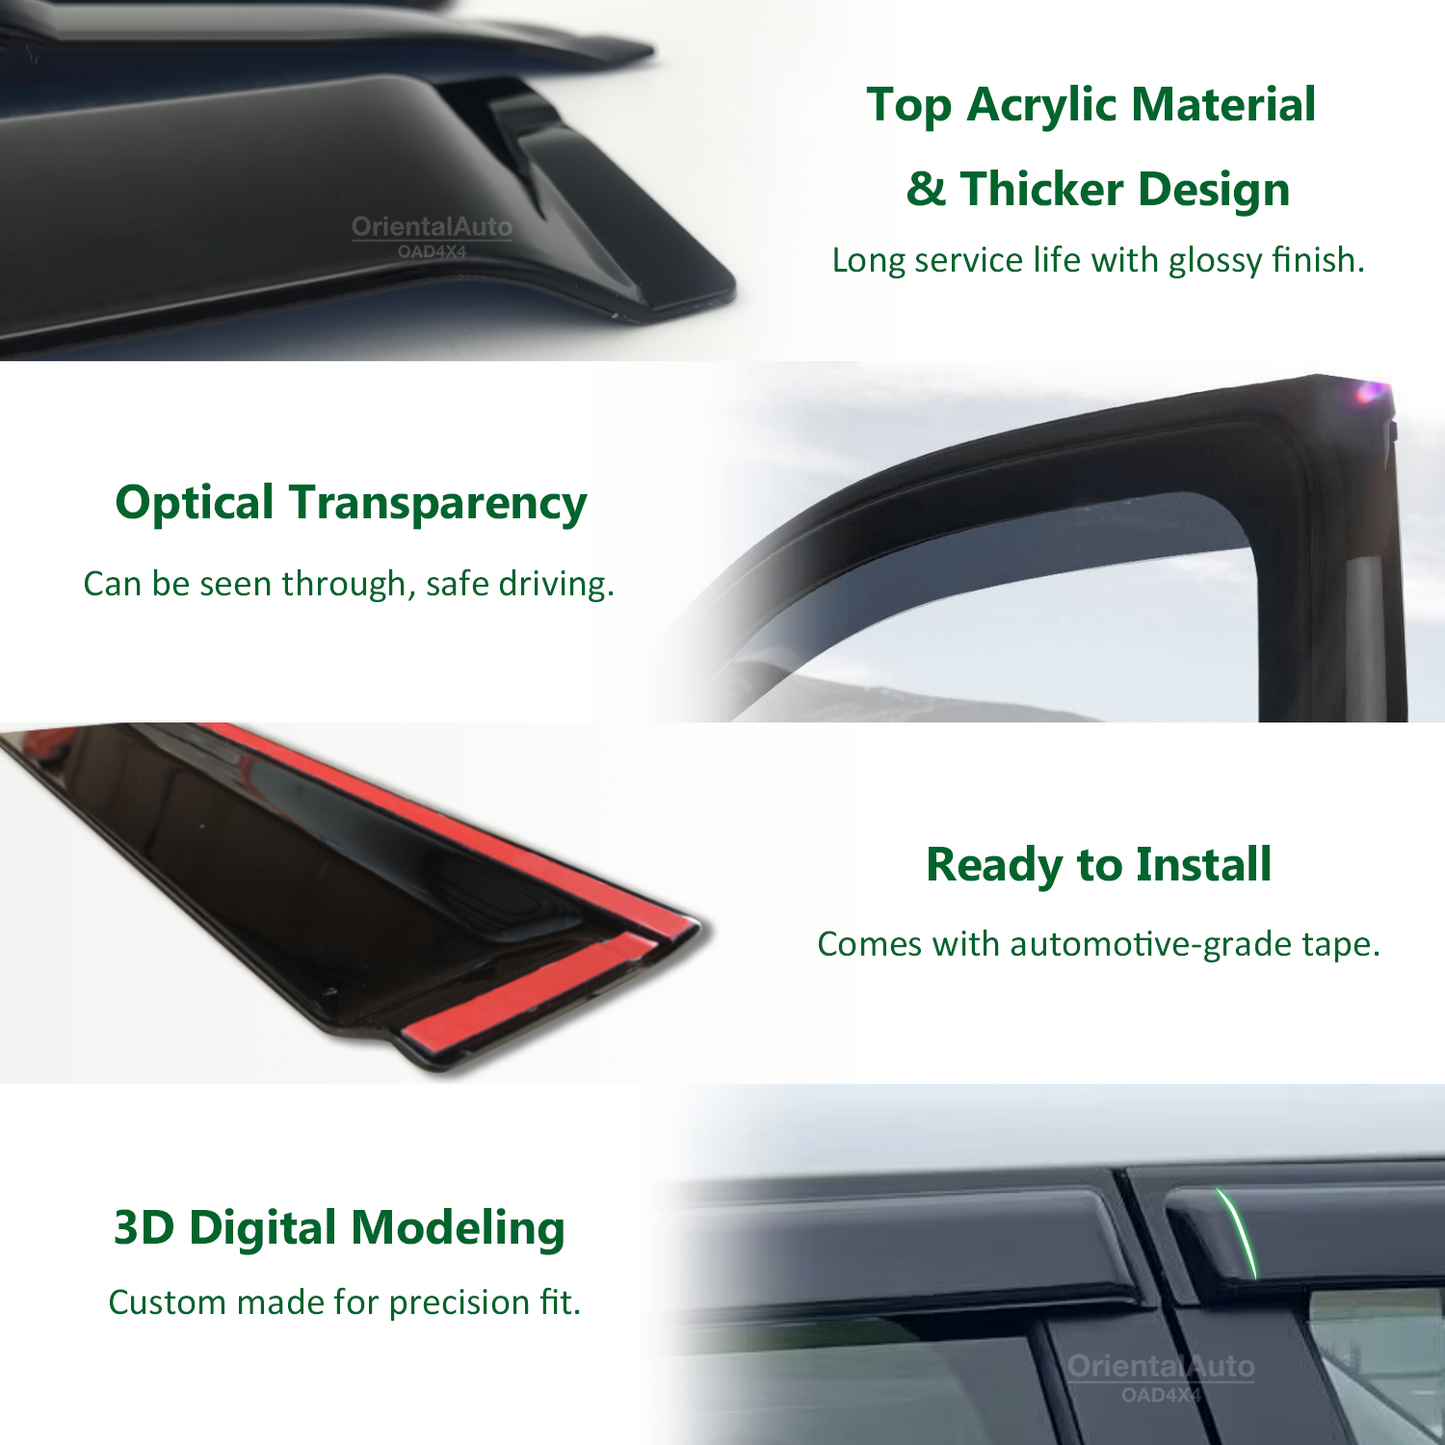 Premium Weather Shields & 3D TPE Cargo Mat For Volkswagen Tiguan 2008-2016 Weathershields Window Visor Boot Mat